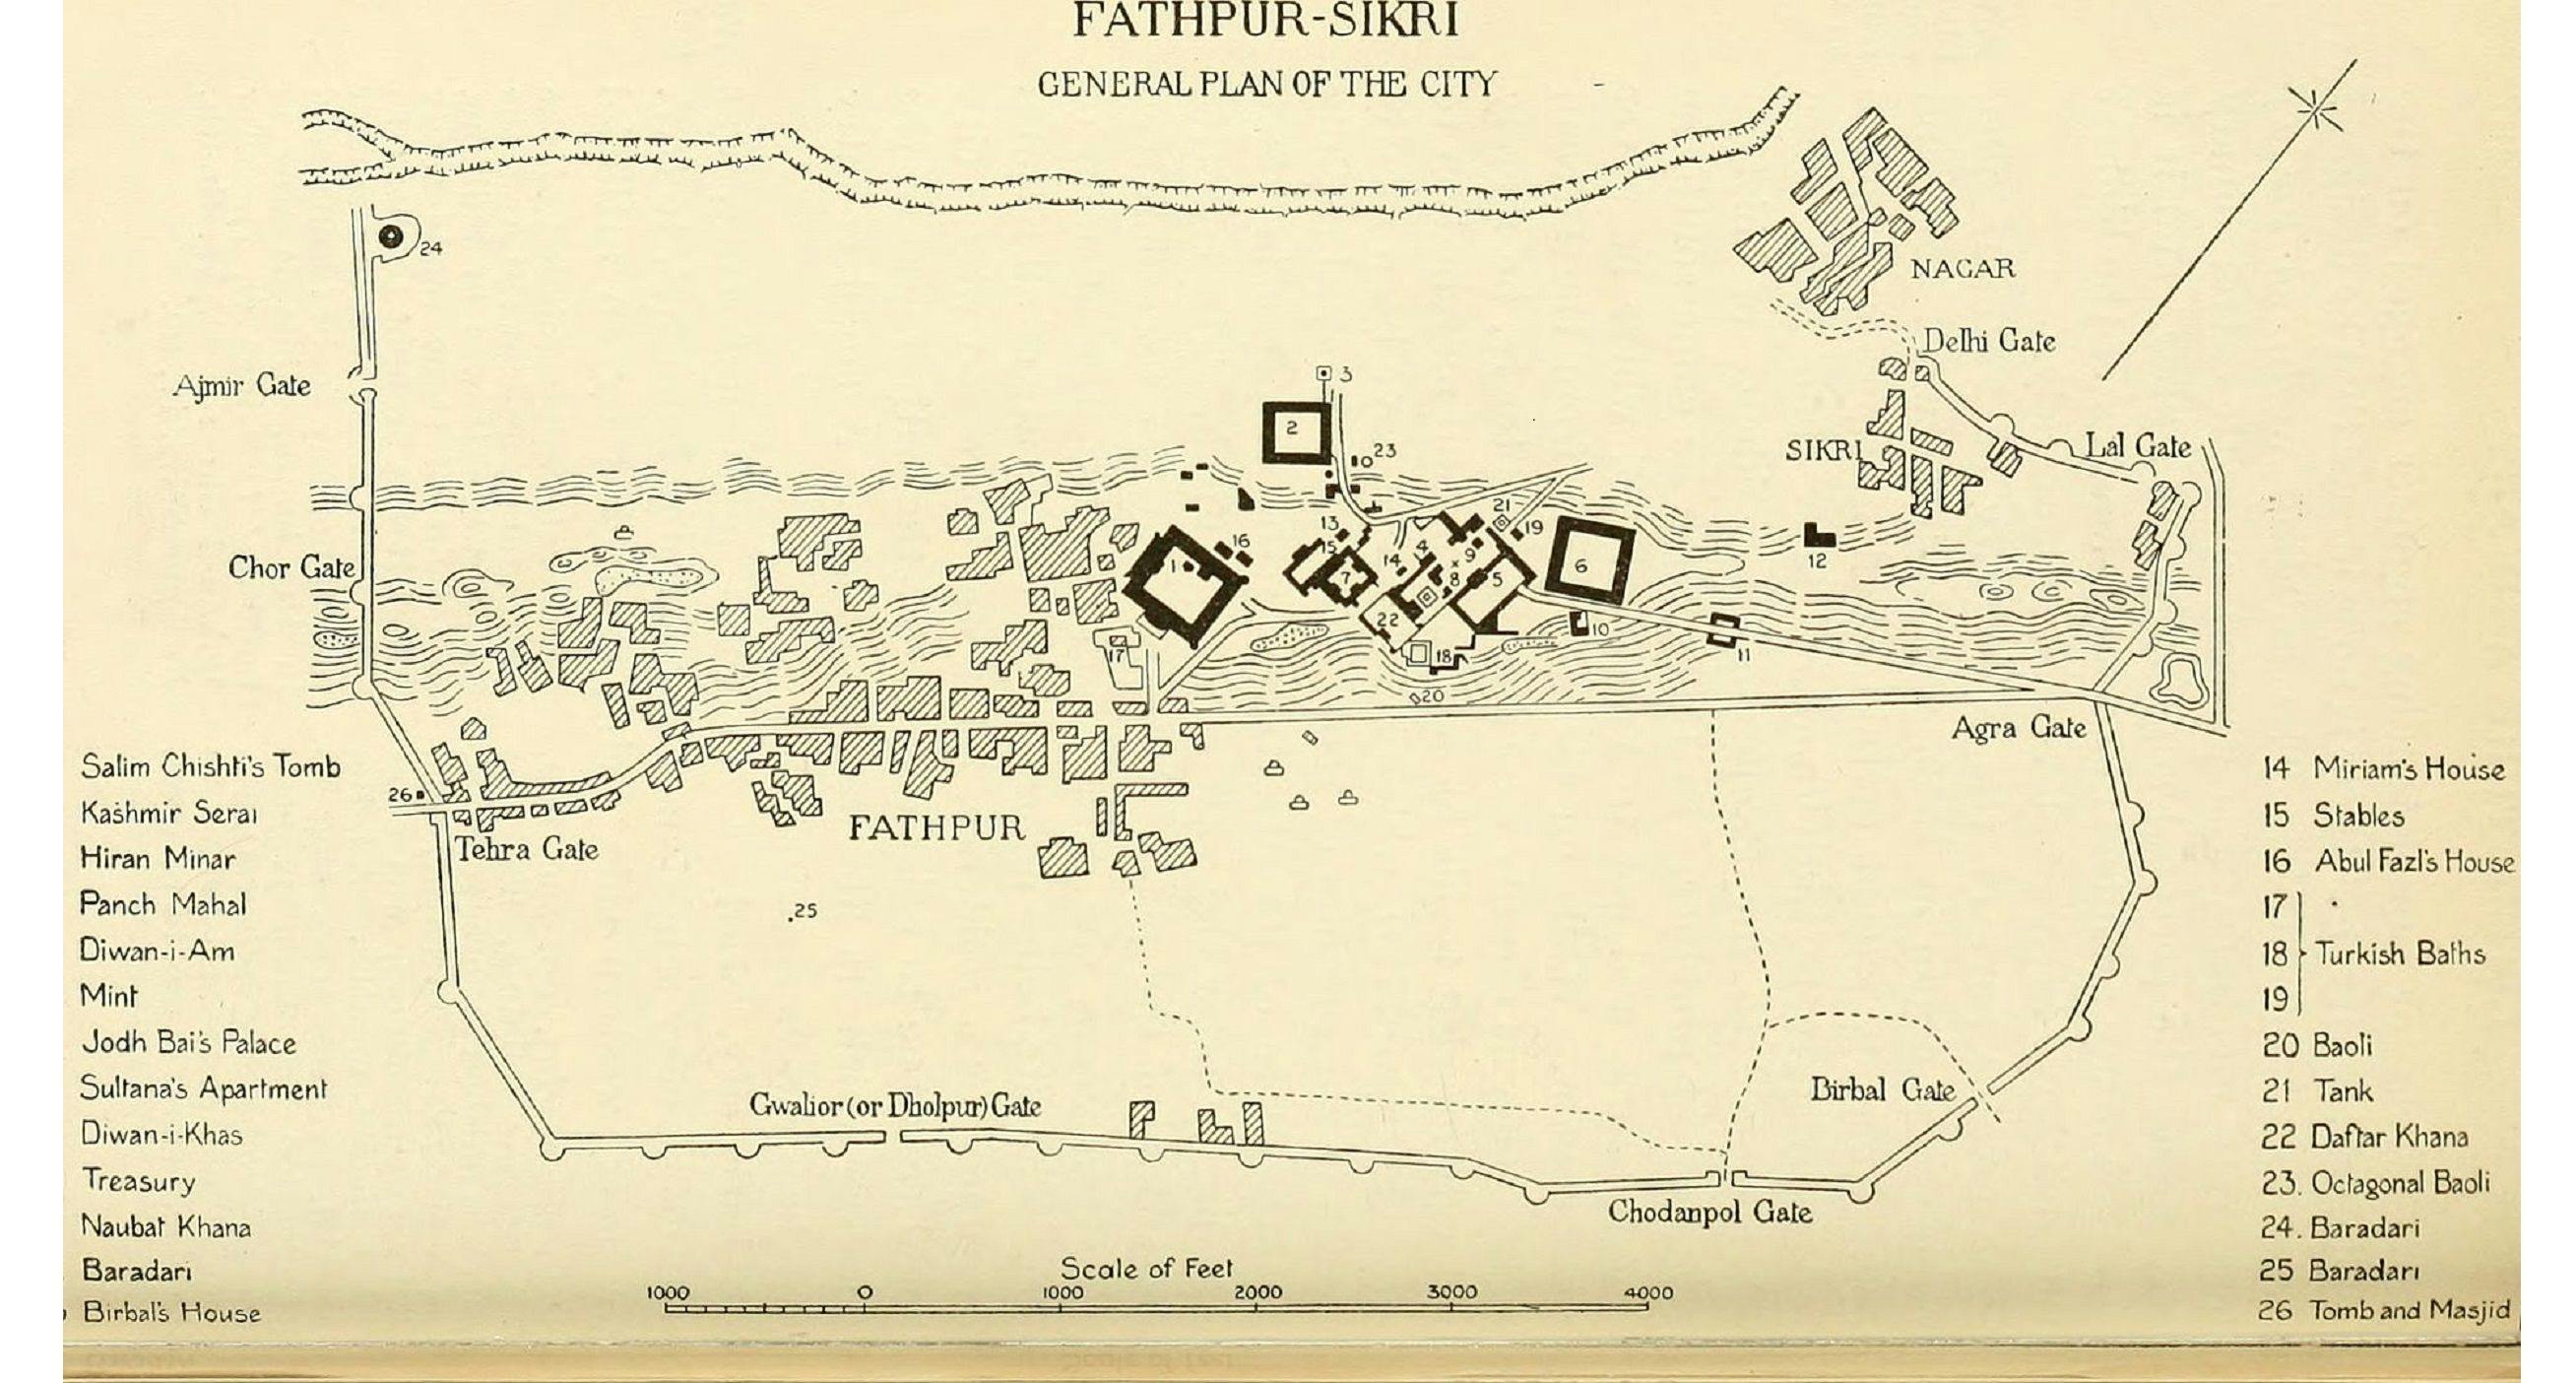 General plan of Fatehpur Sikri city in 1917